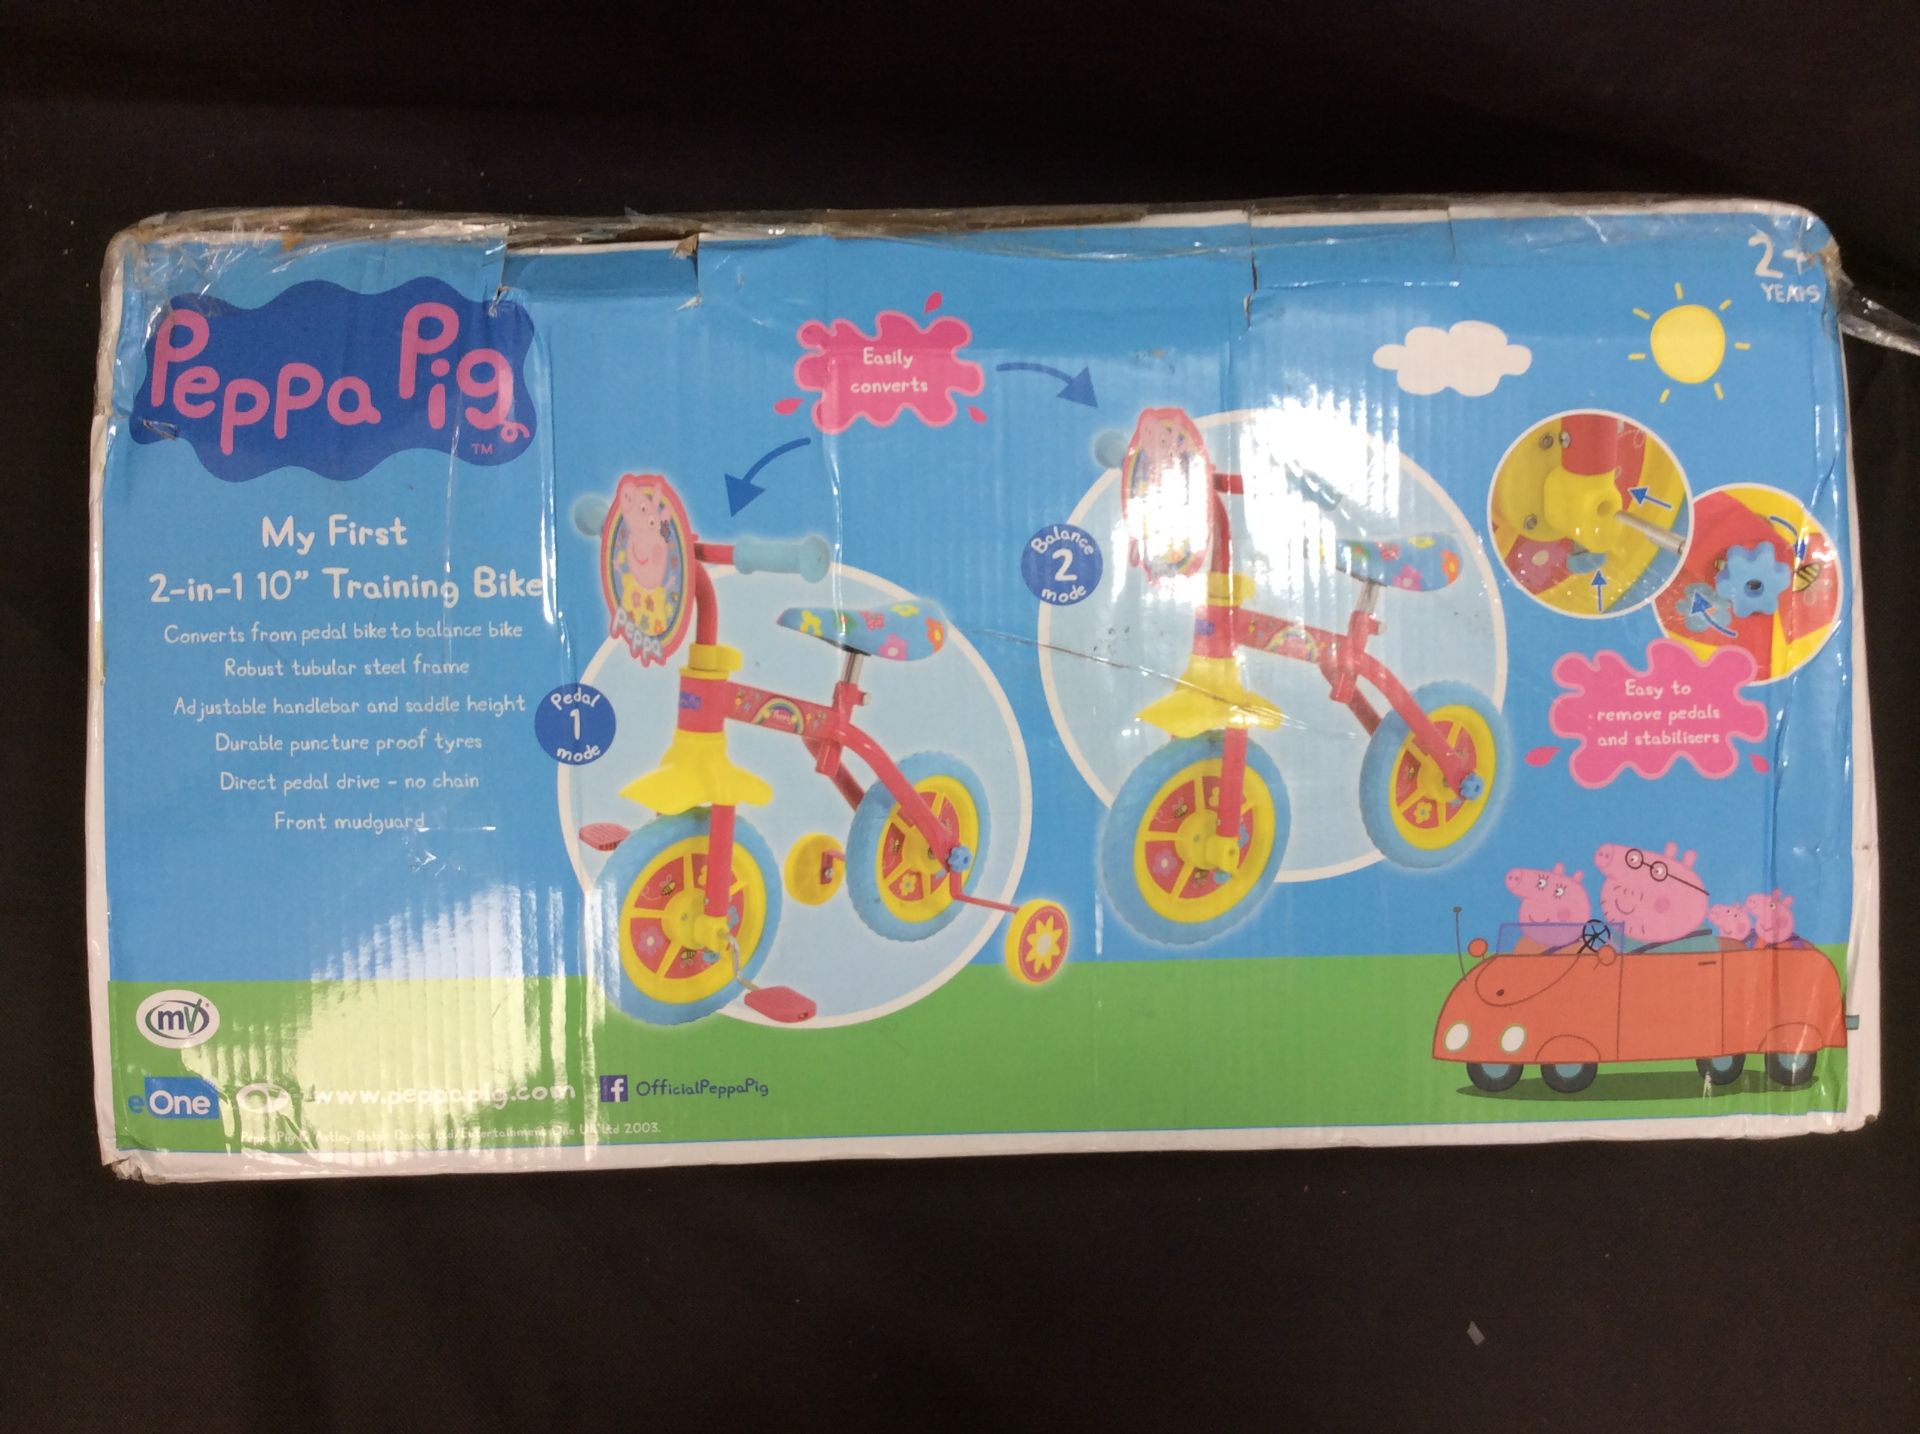 Peppa Pig My First 2 in 1 10" Training Bike